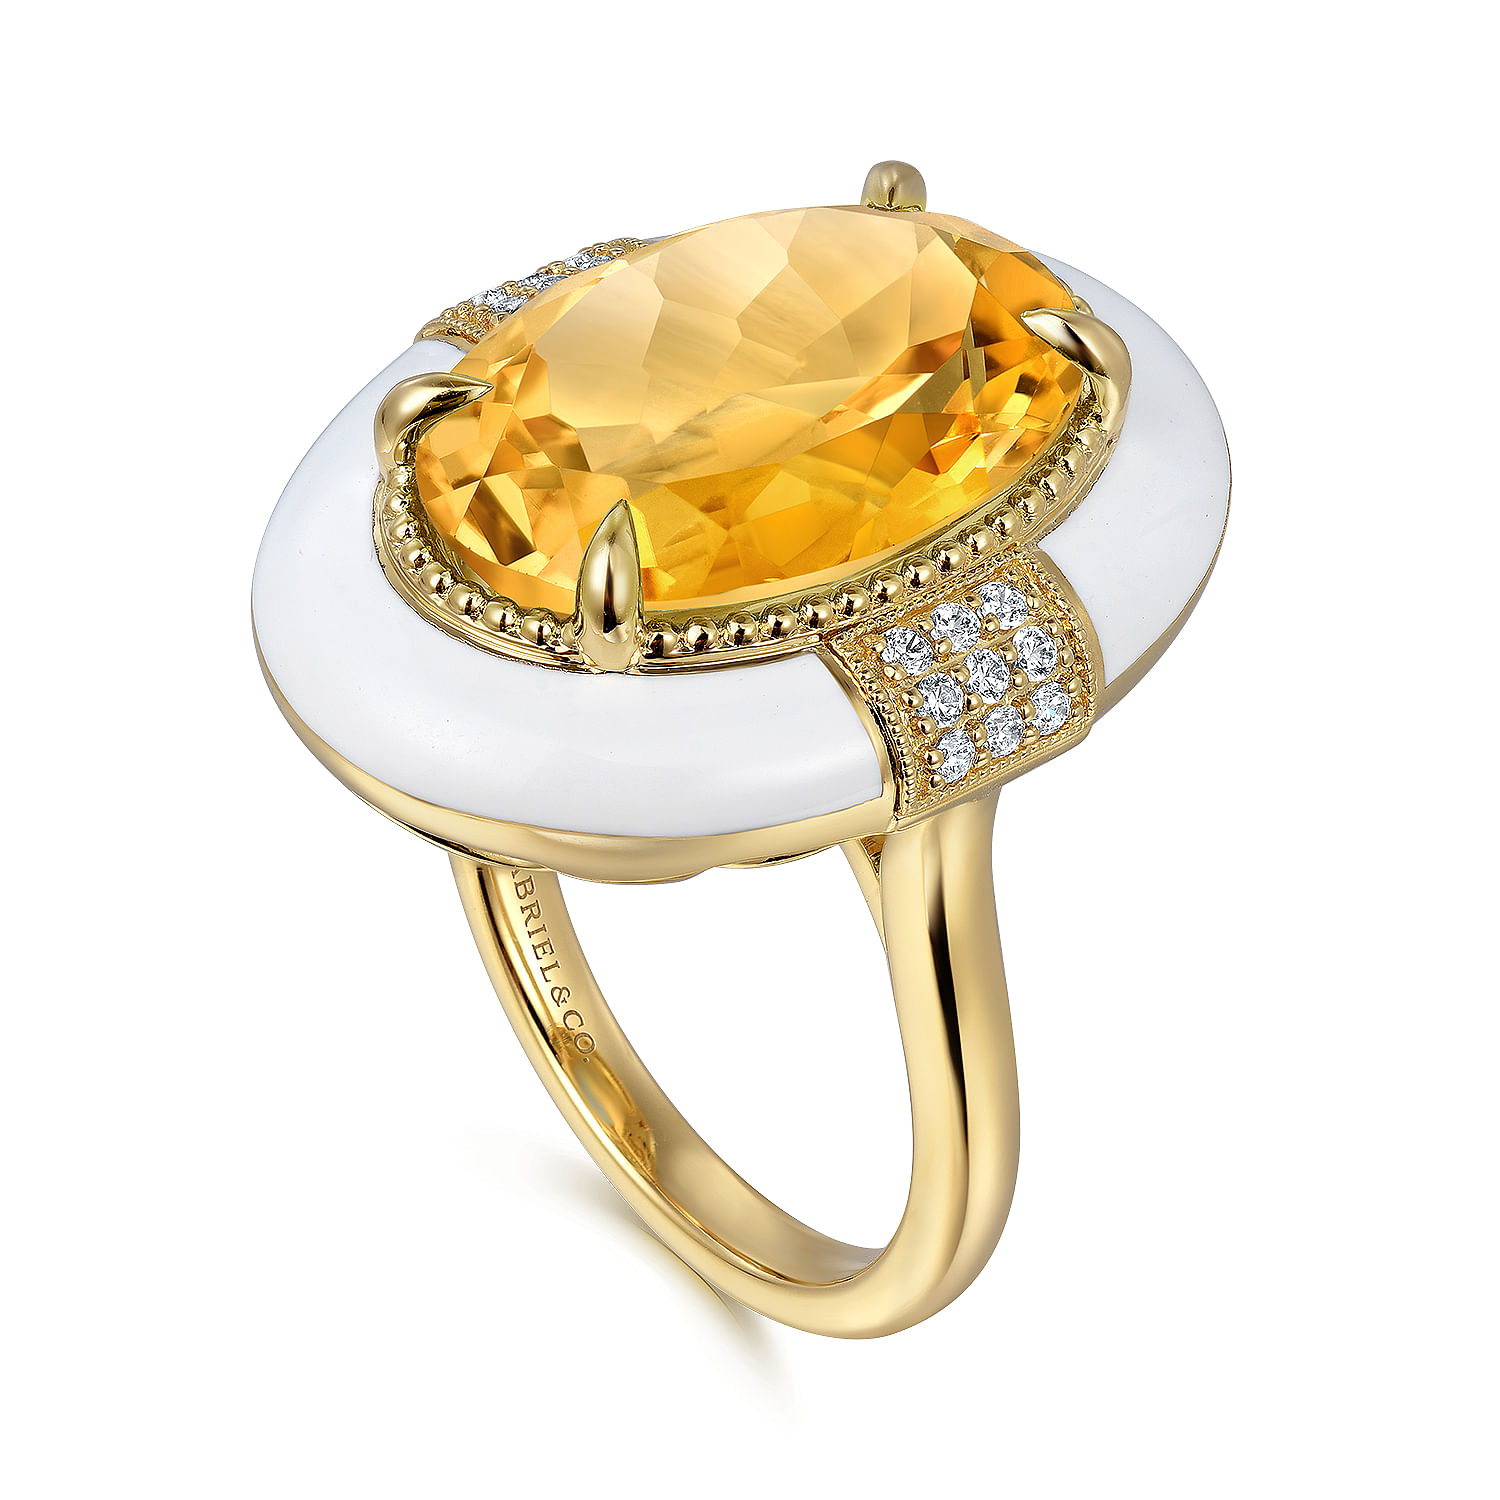 14K Yellow Gold Diamond and Citrine Fashion Ring With White Enamel